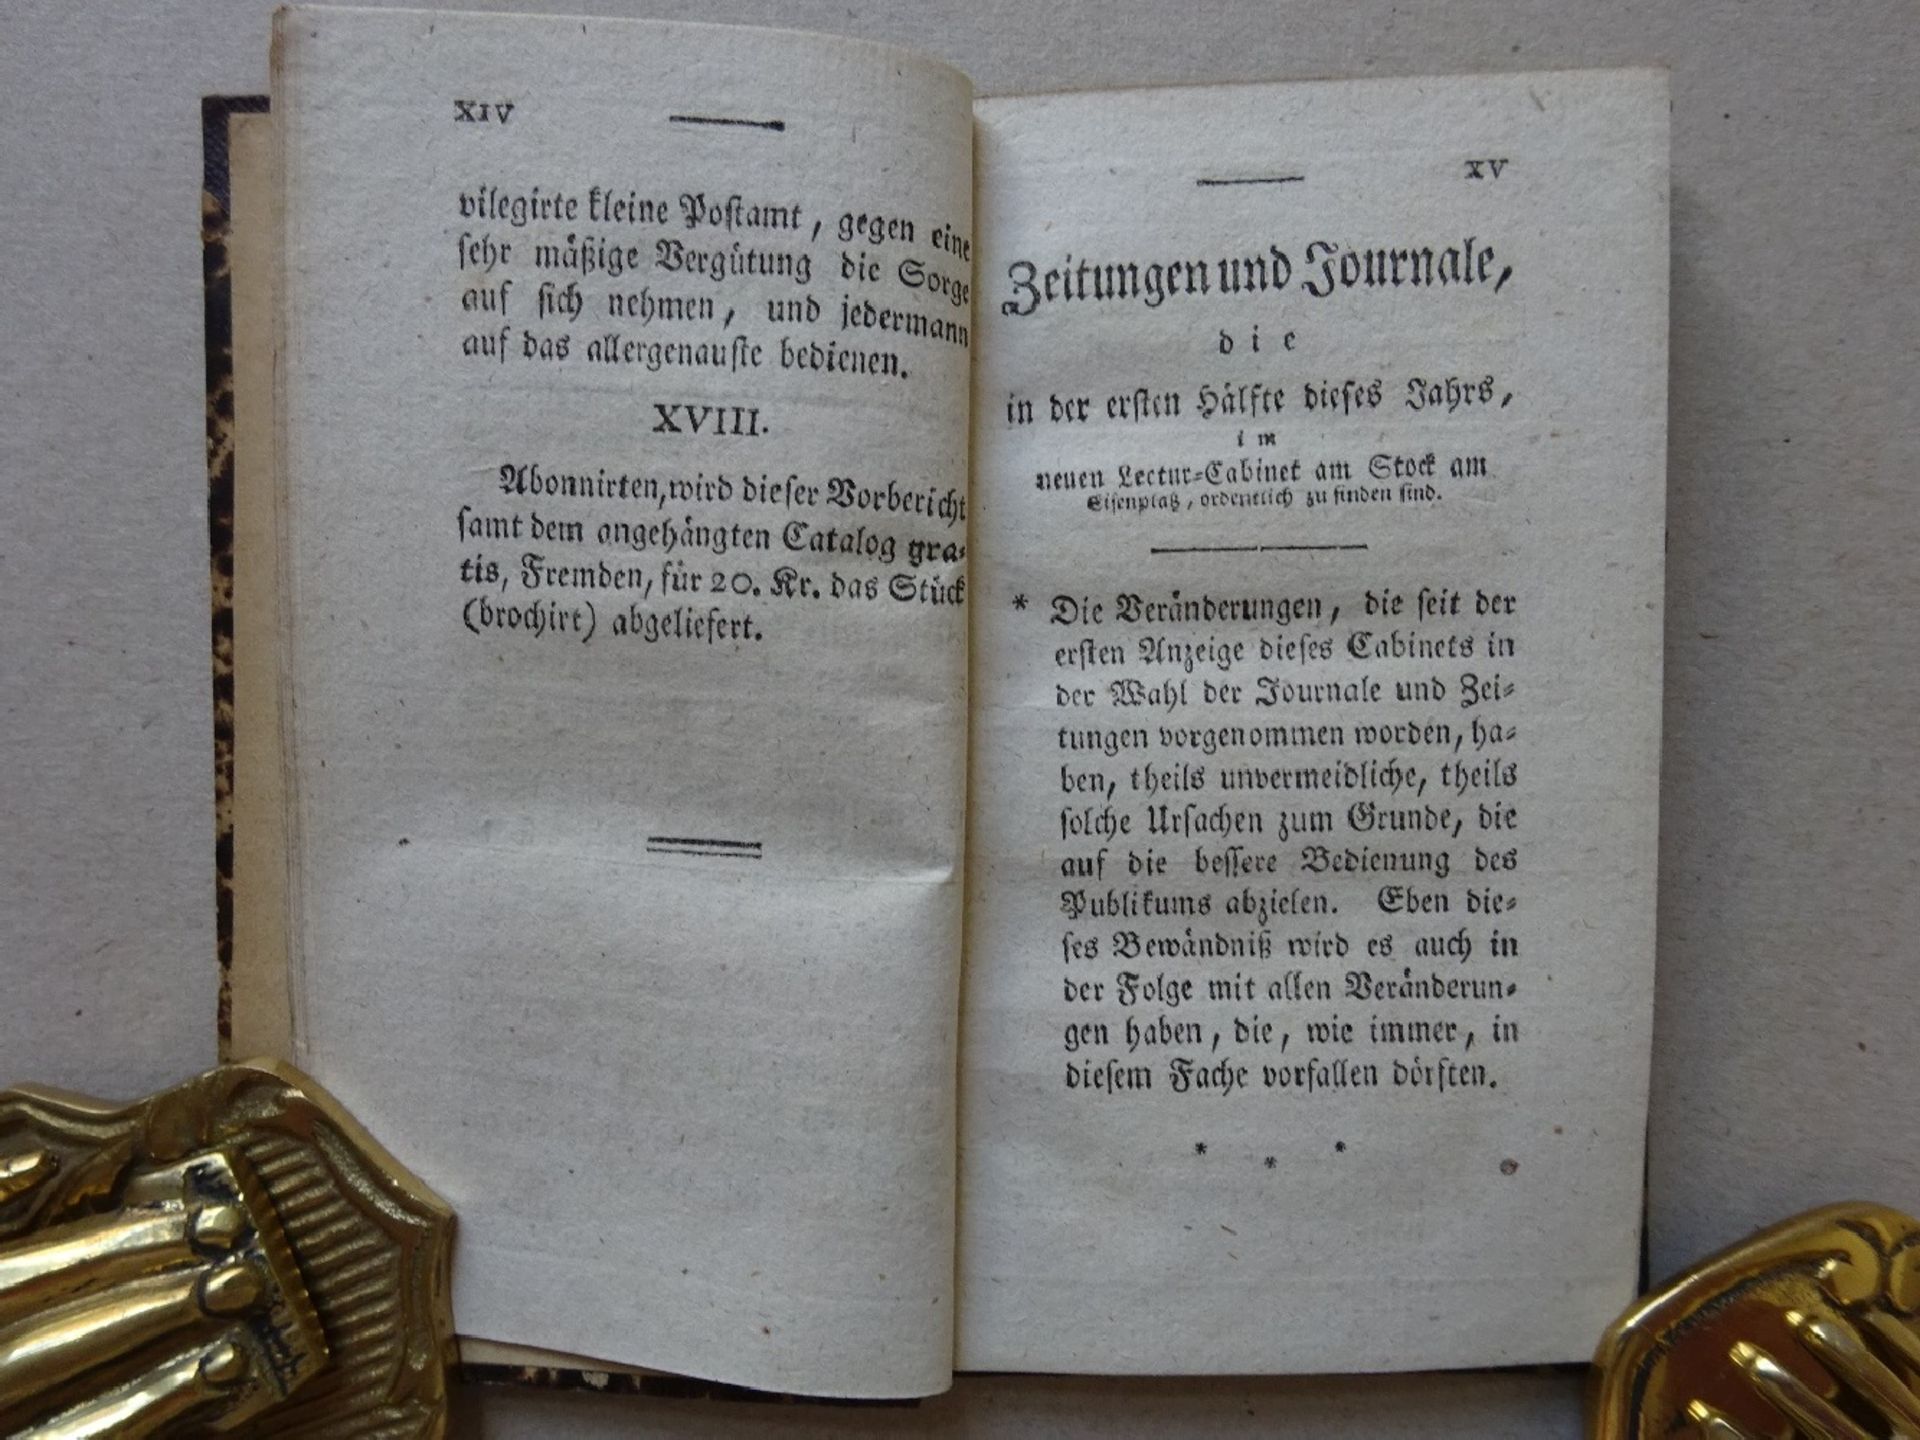 LecturCabinets zu Wien 1776 - Image 3 of 5